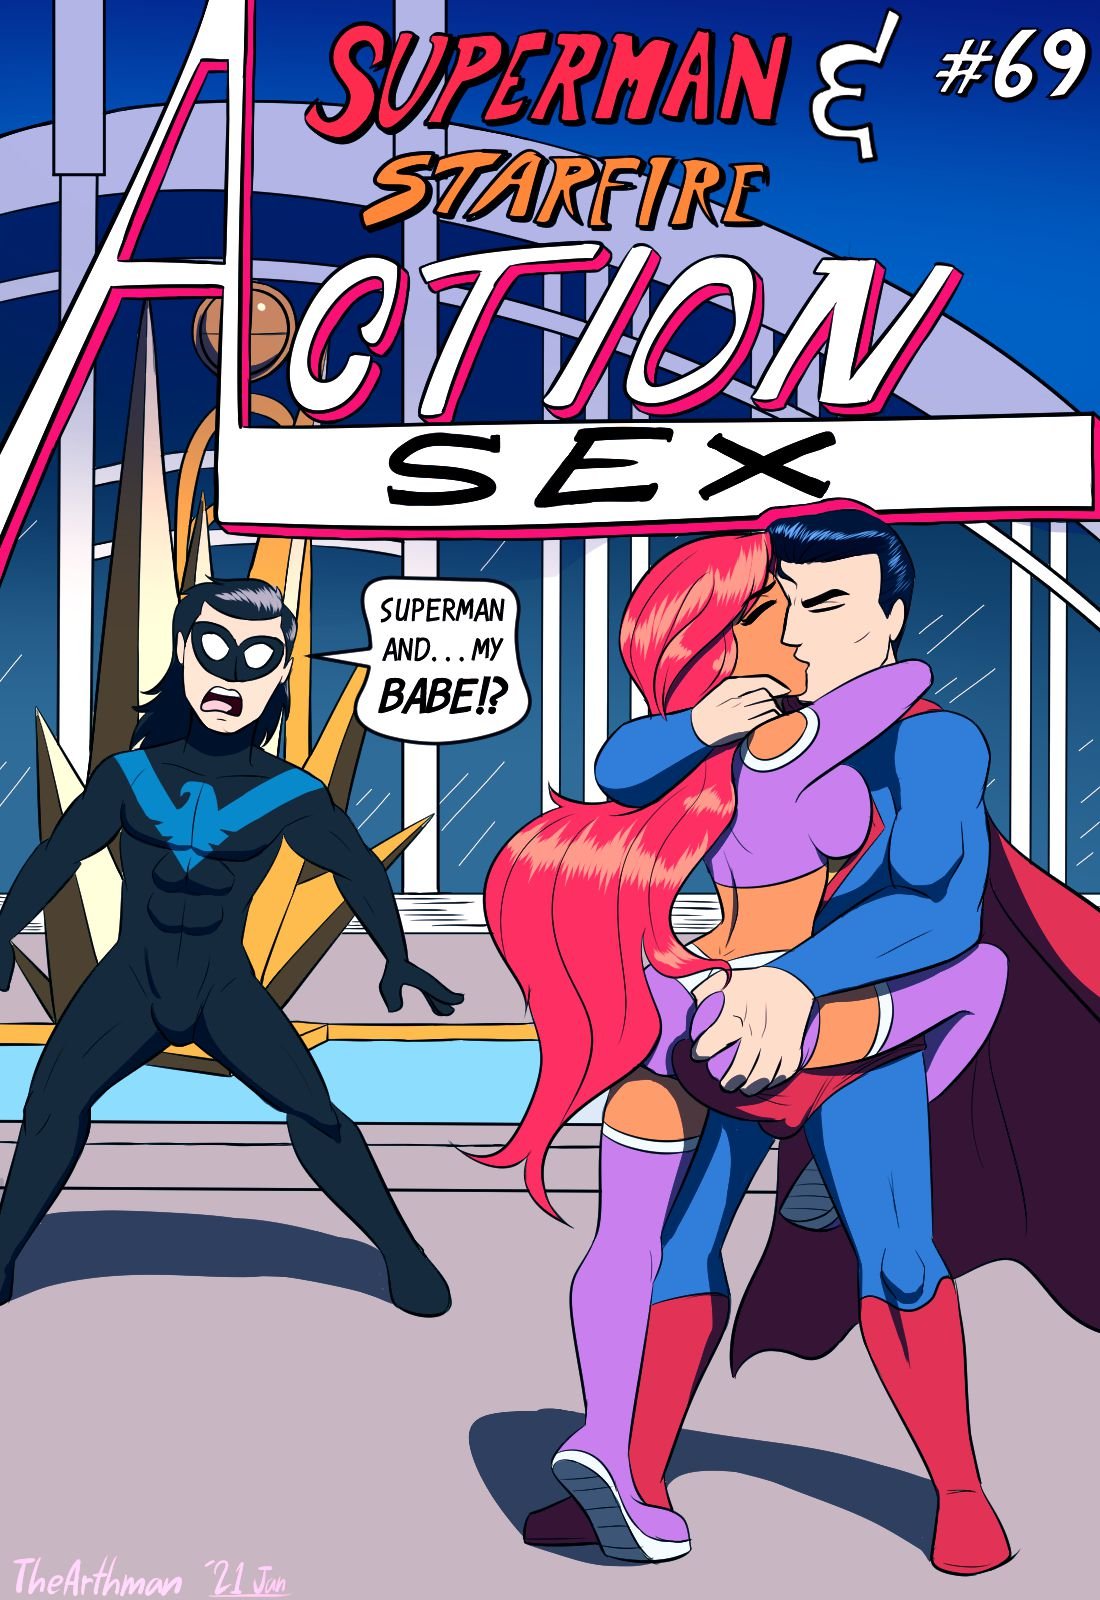 Action Sex (Justice League) The Arthman - 1 